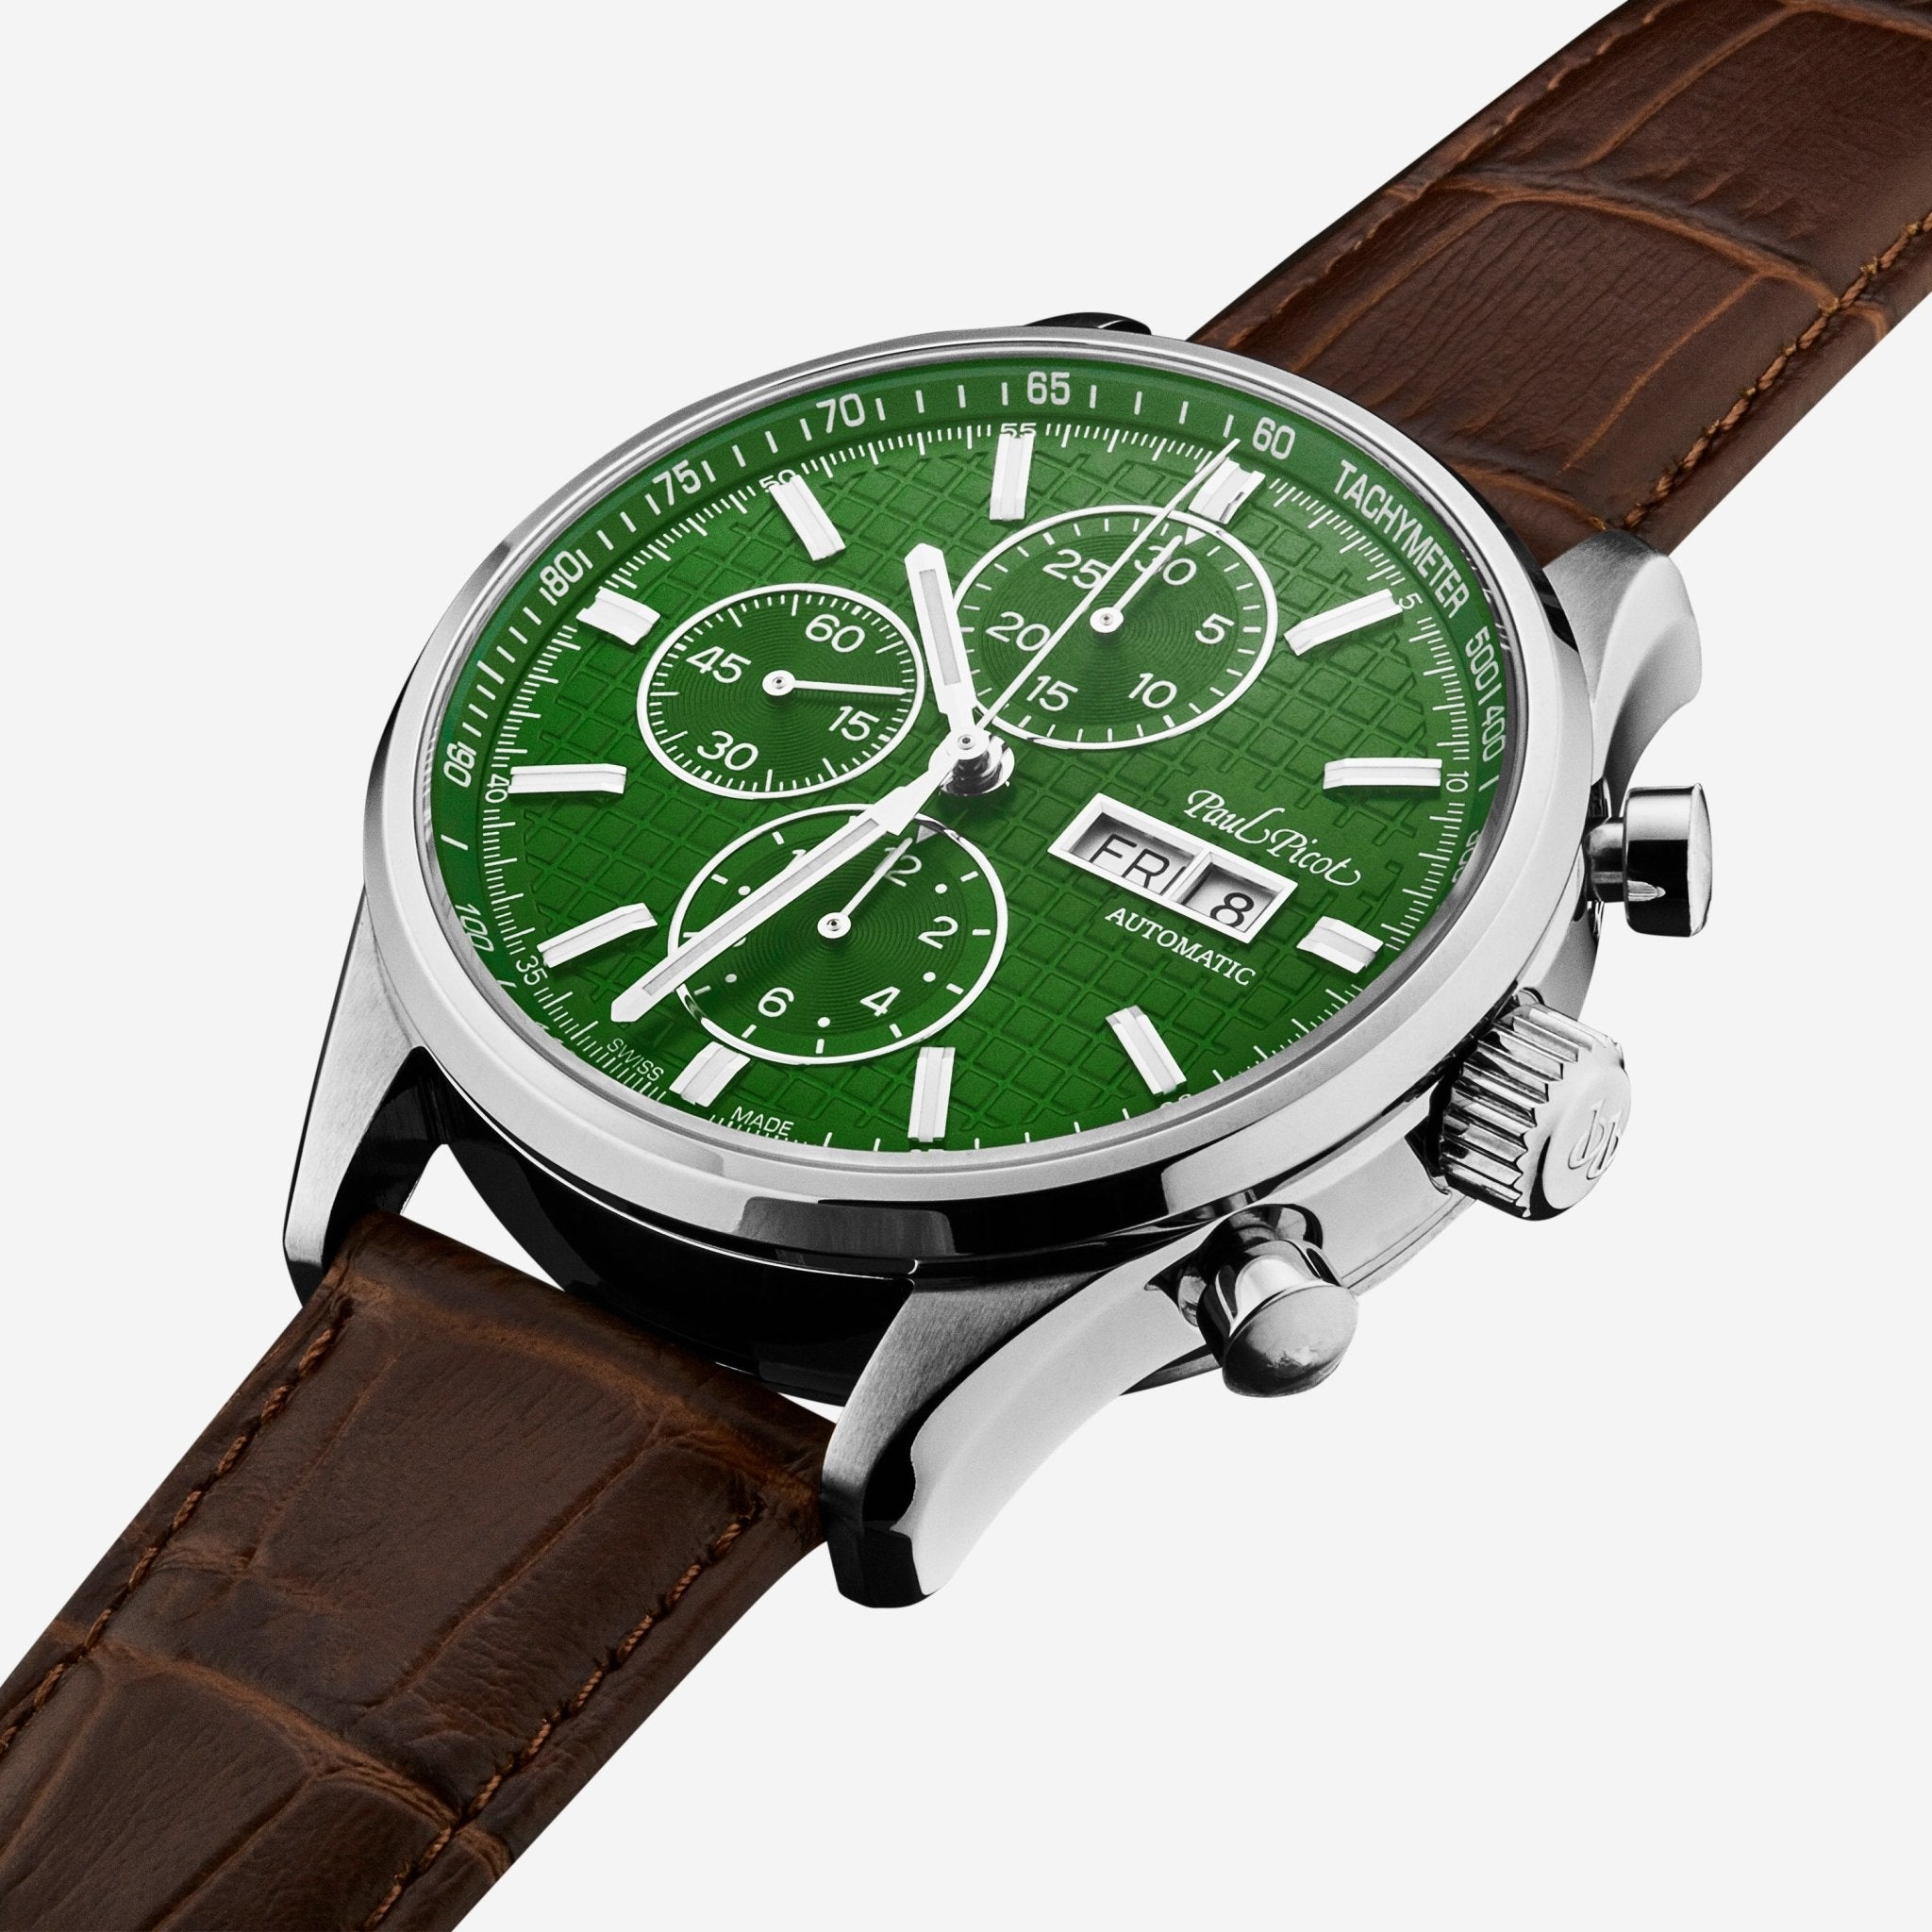 Paul Picot Gentleman Blazer Chronograph Green Dial Men's Automatic Watch P4309.SG.1021.6614 - THE SOLIST - Paul Picot